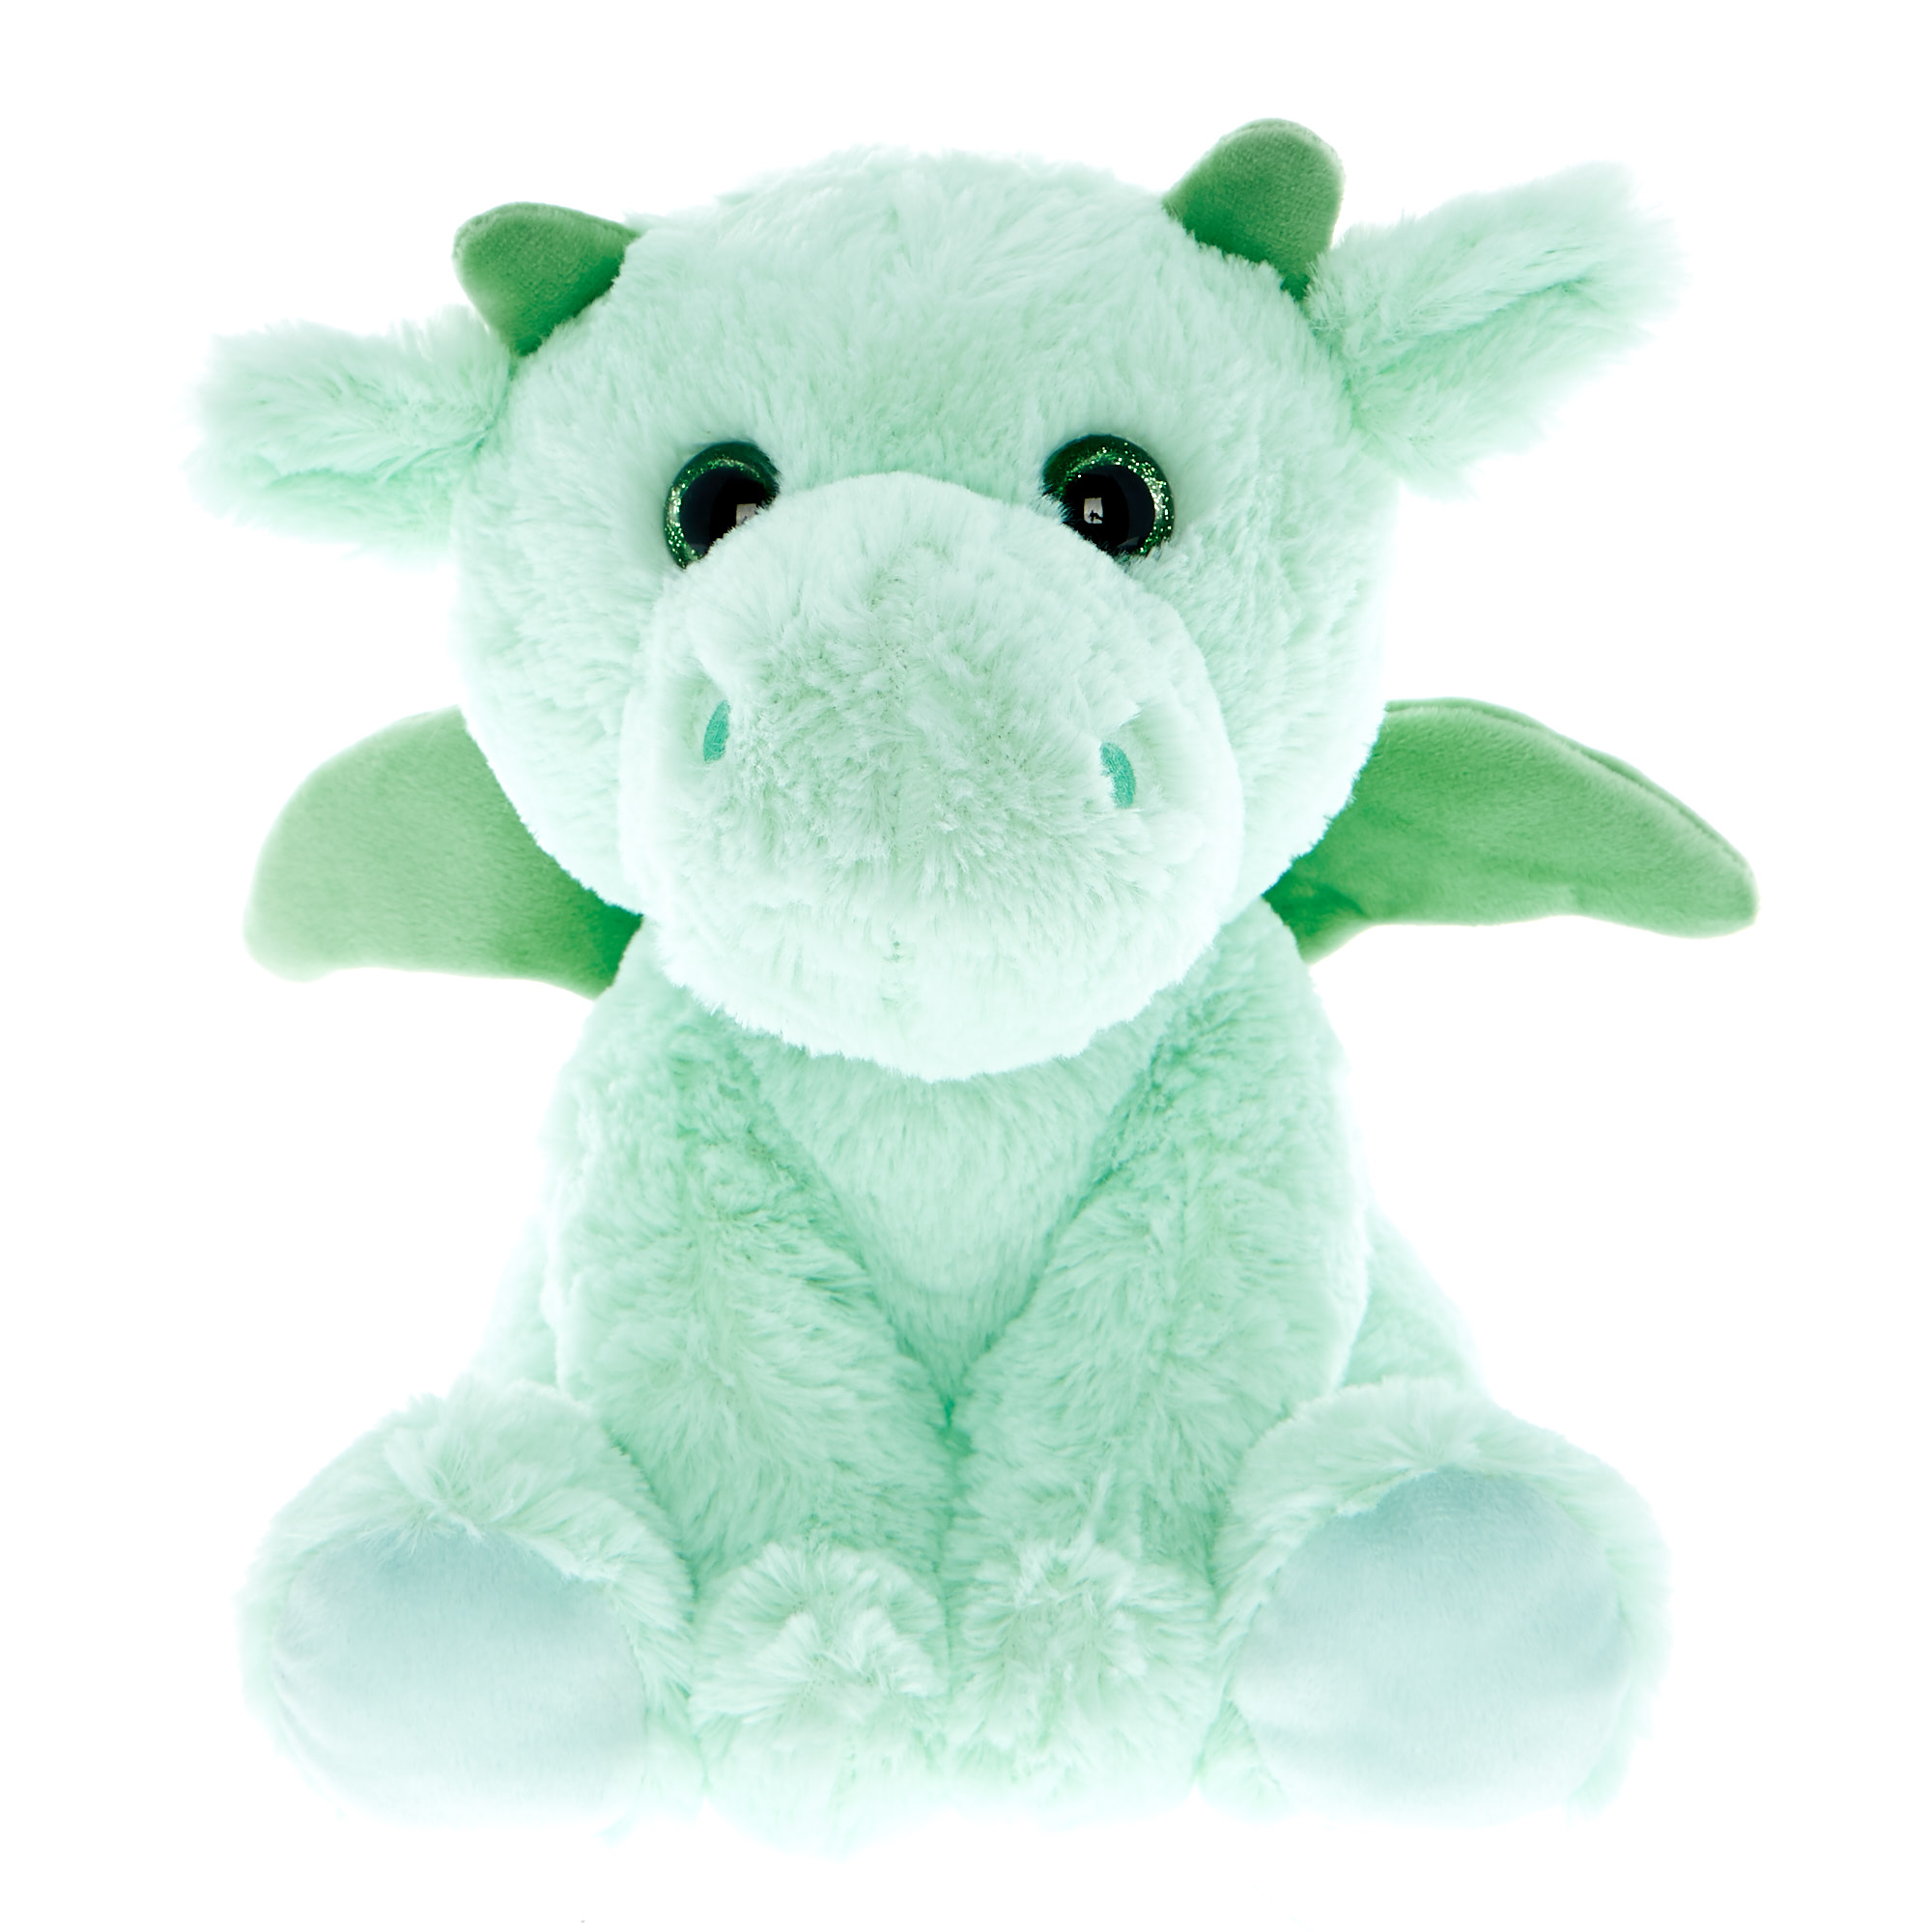 Green Dragon Soft Toy